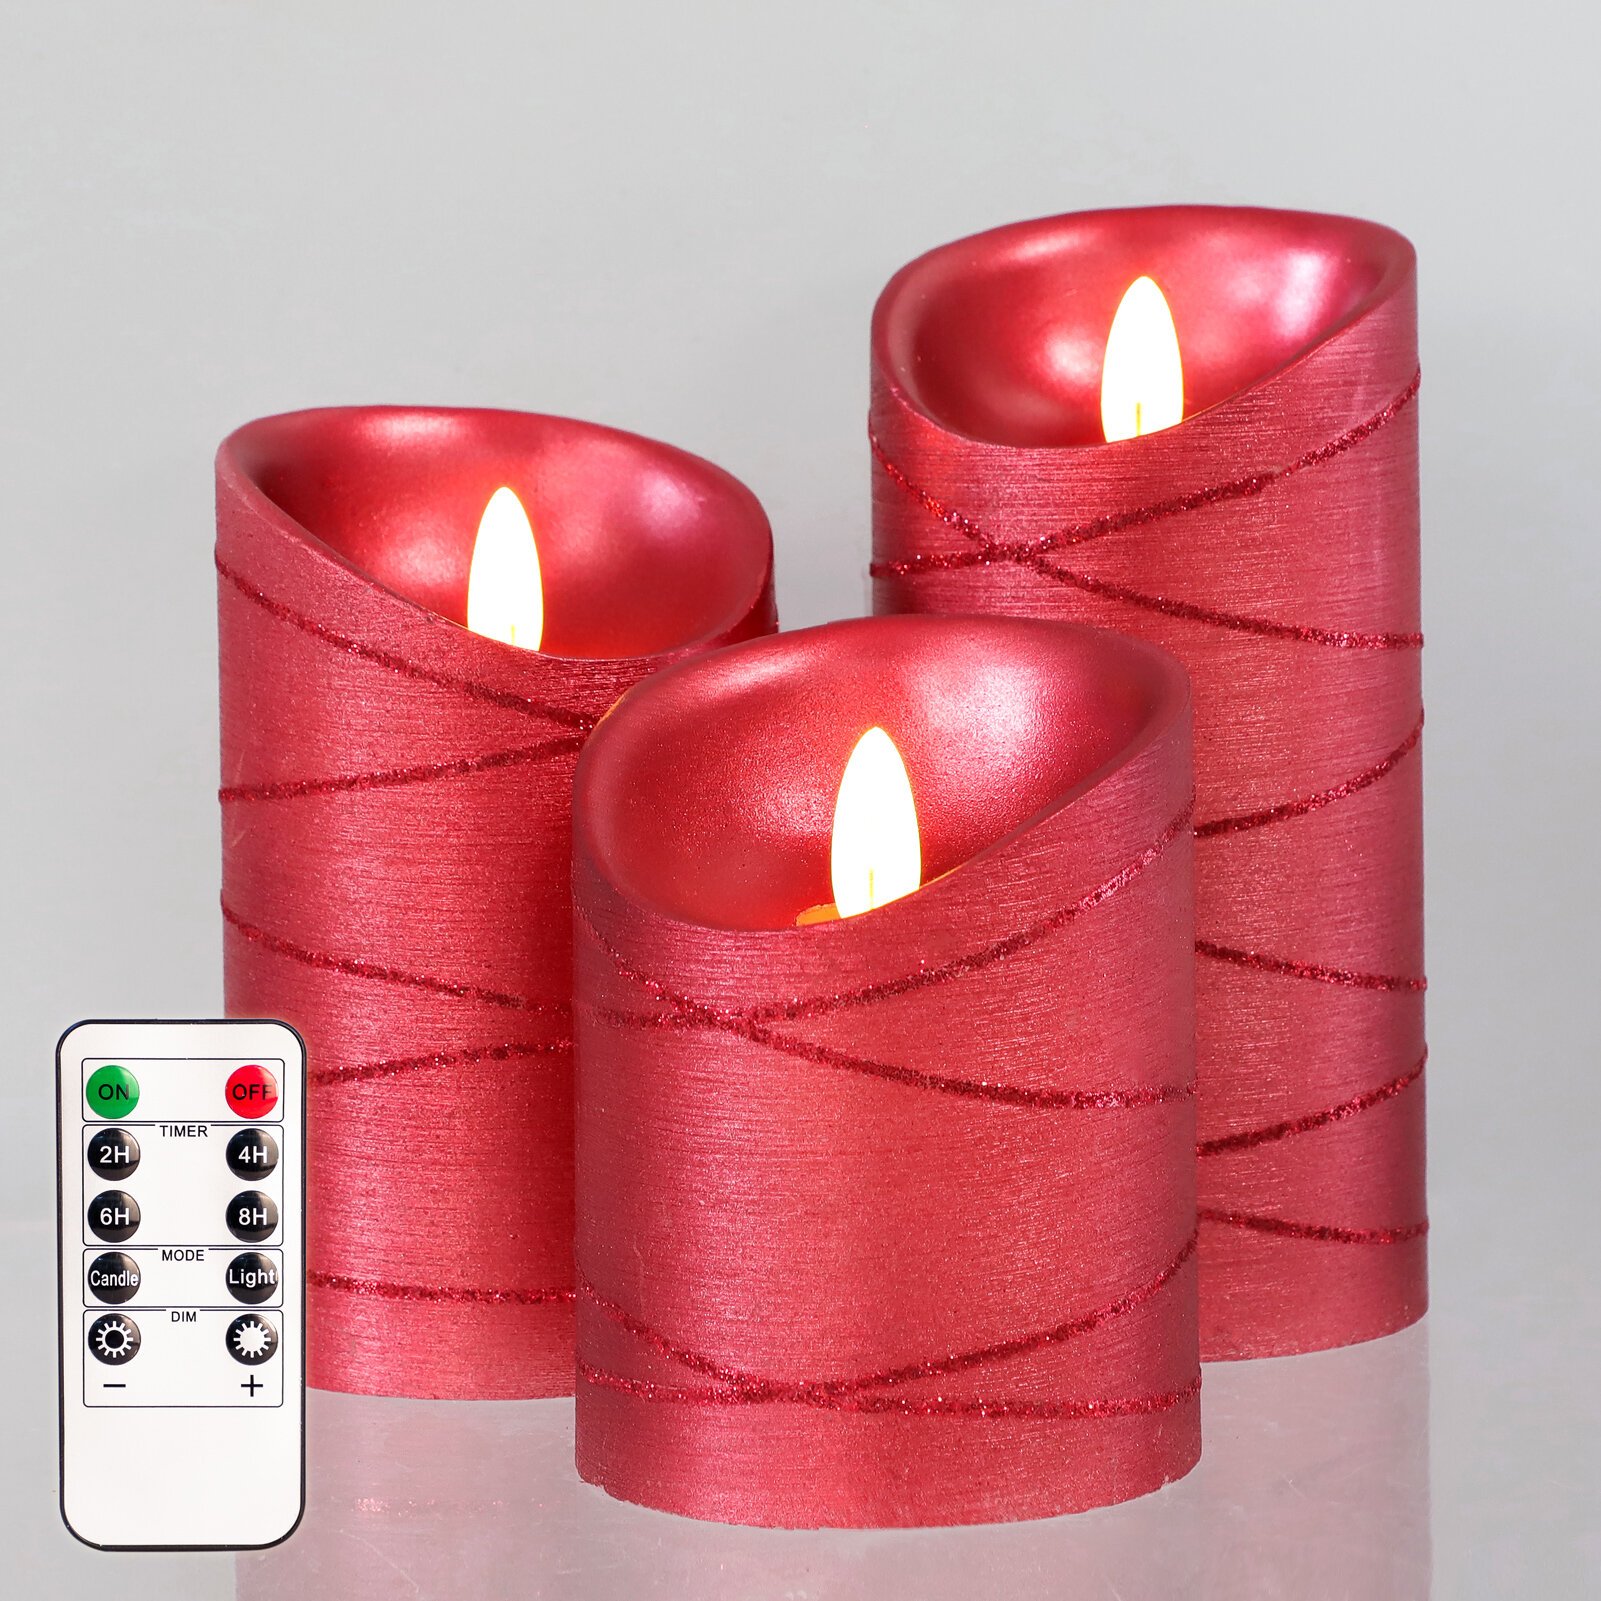 3Pcs/Set Ivory Flameless Flickering LED Candles Timer Remote Control Xmas Decor 